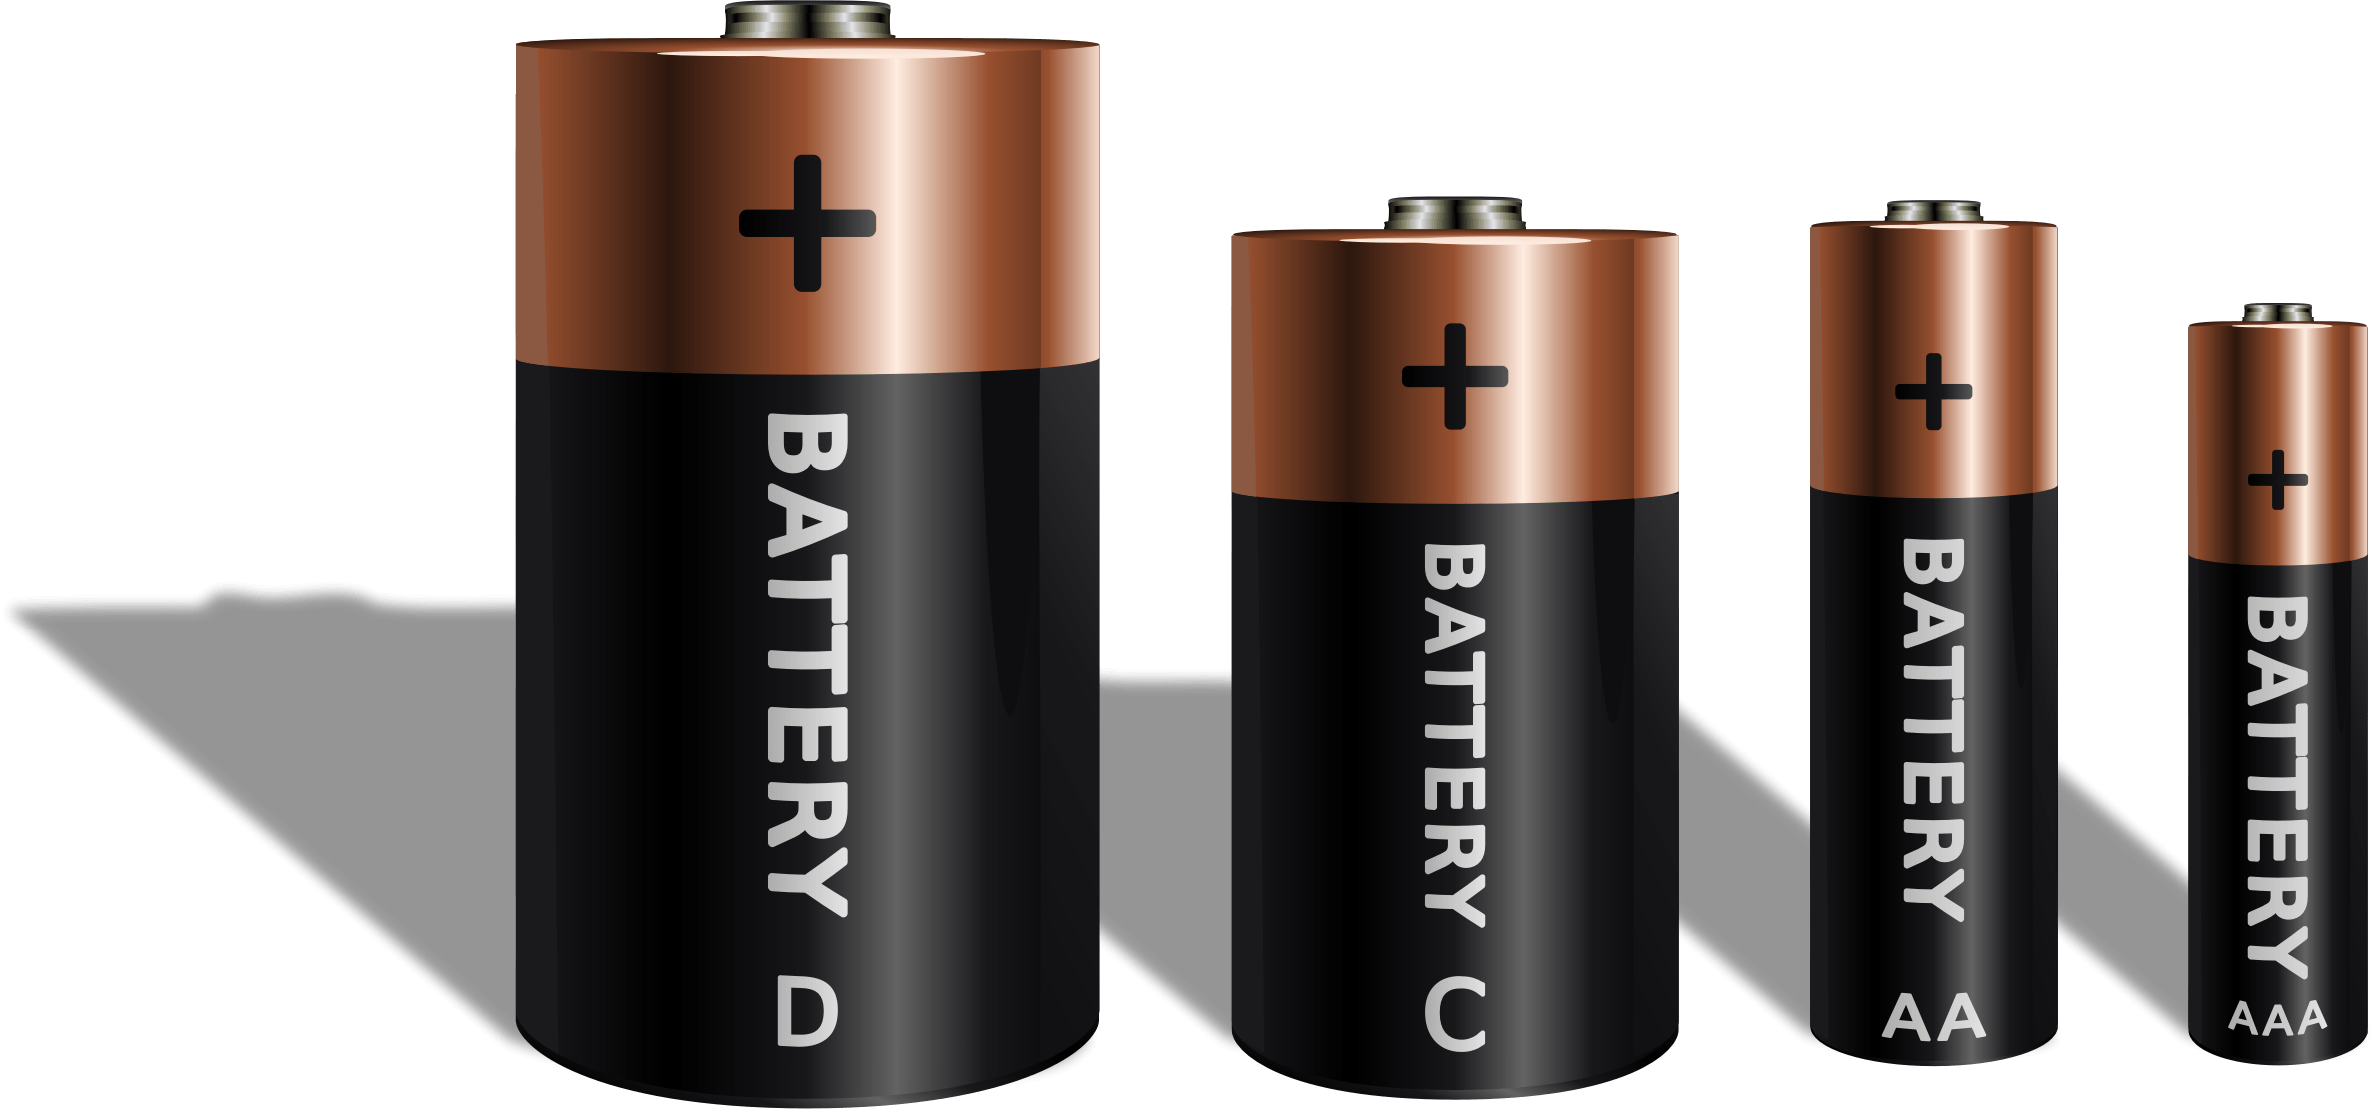 Батарейка battery. Батарейка. Изображение батарейки. Электрические батарейки. Современные батарейки.